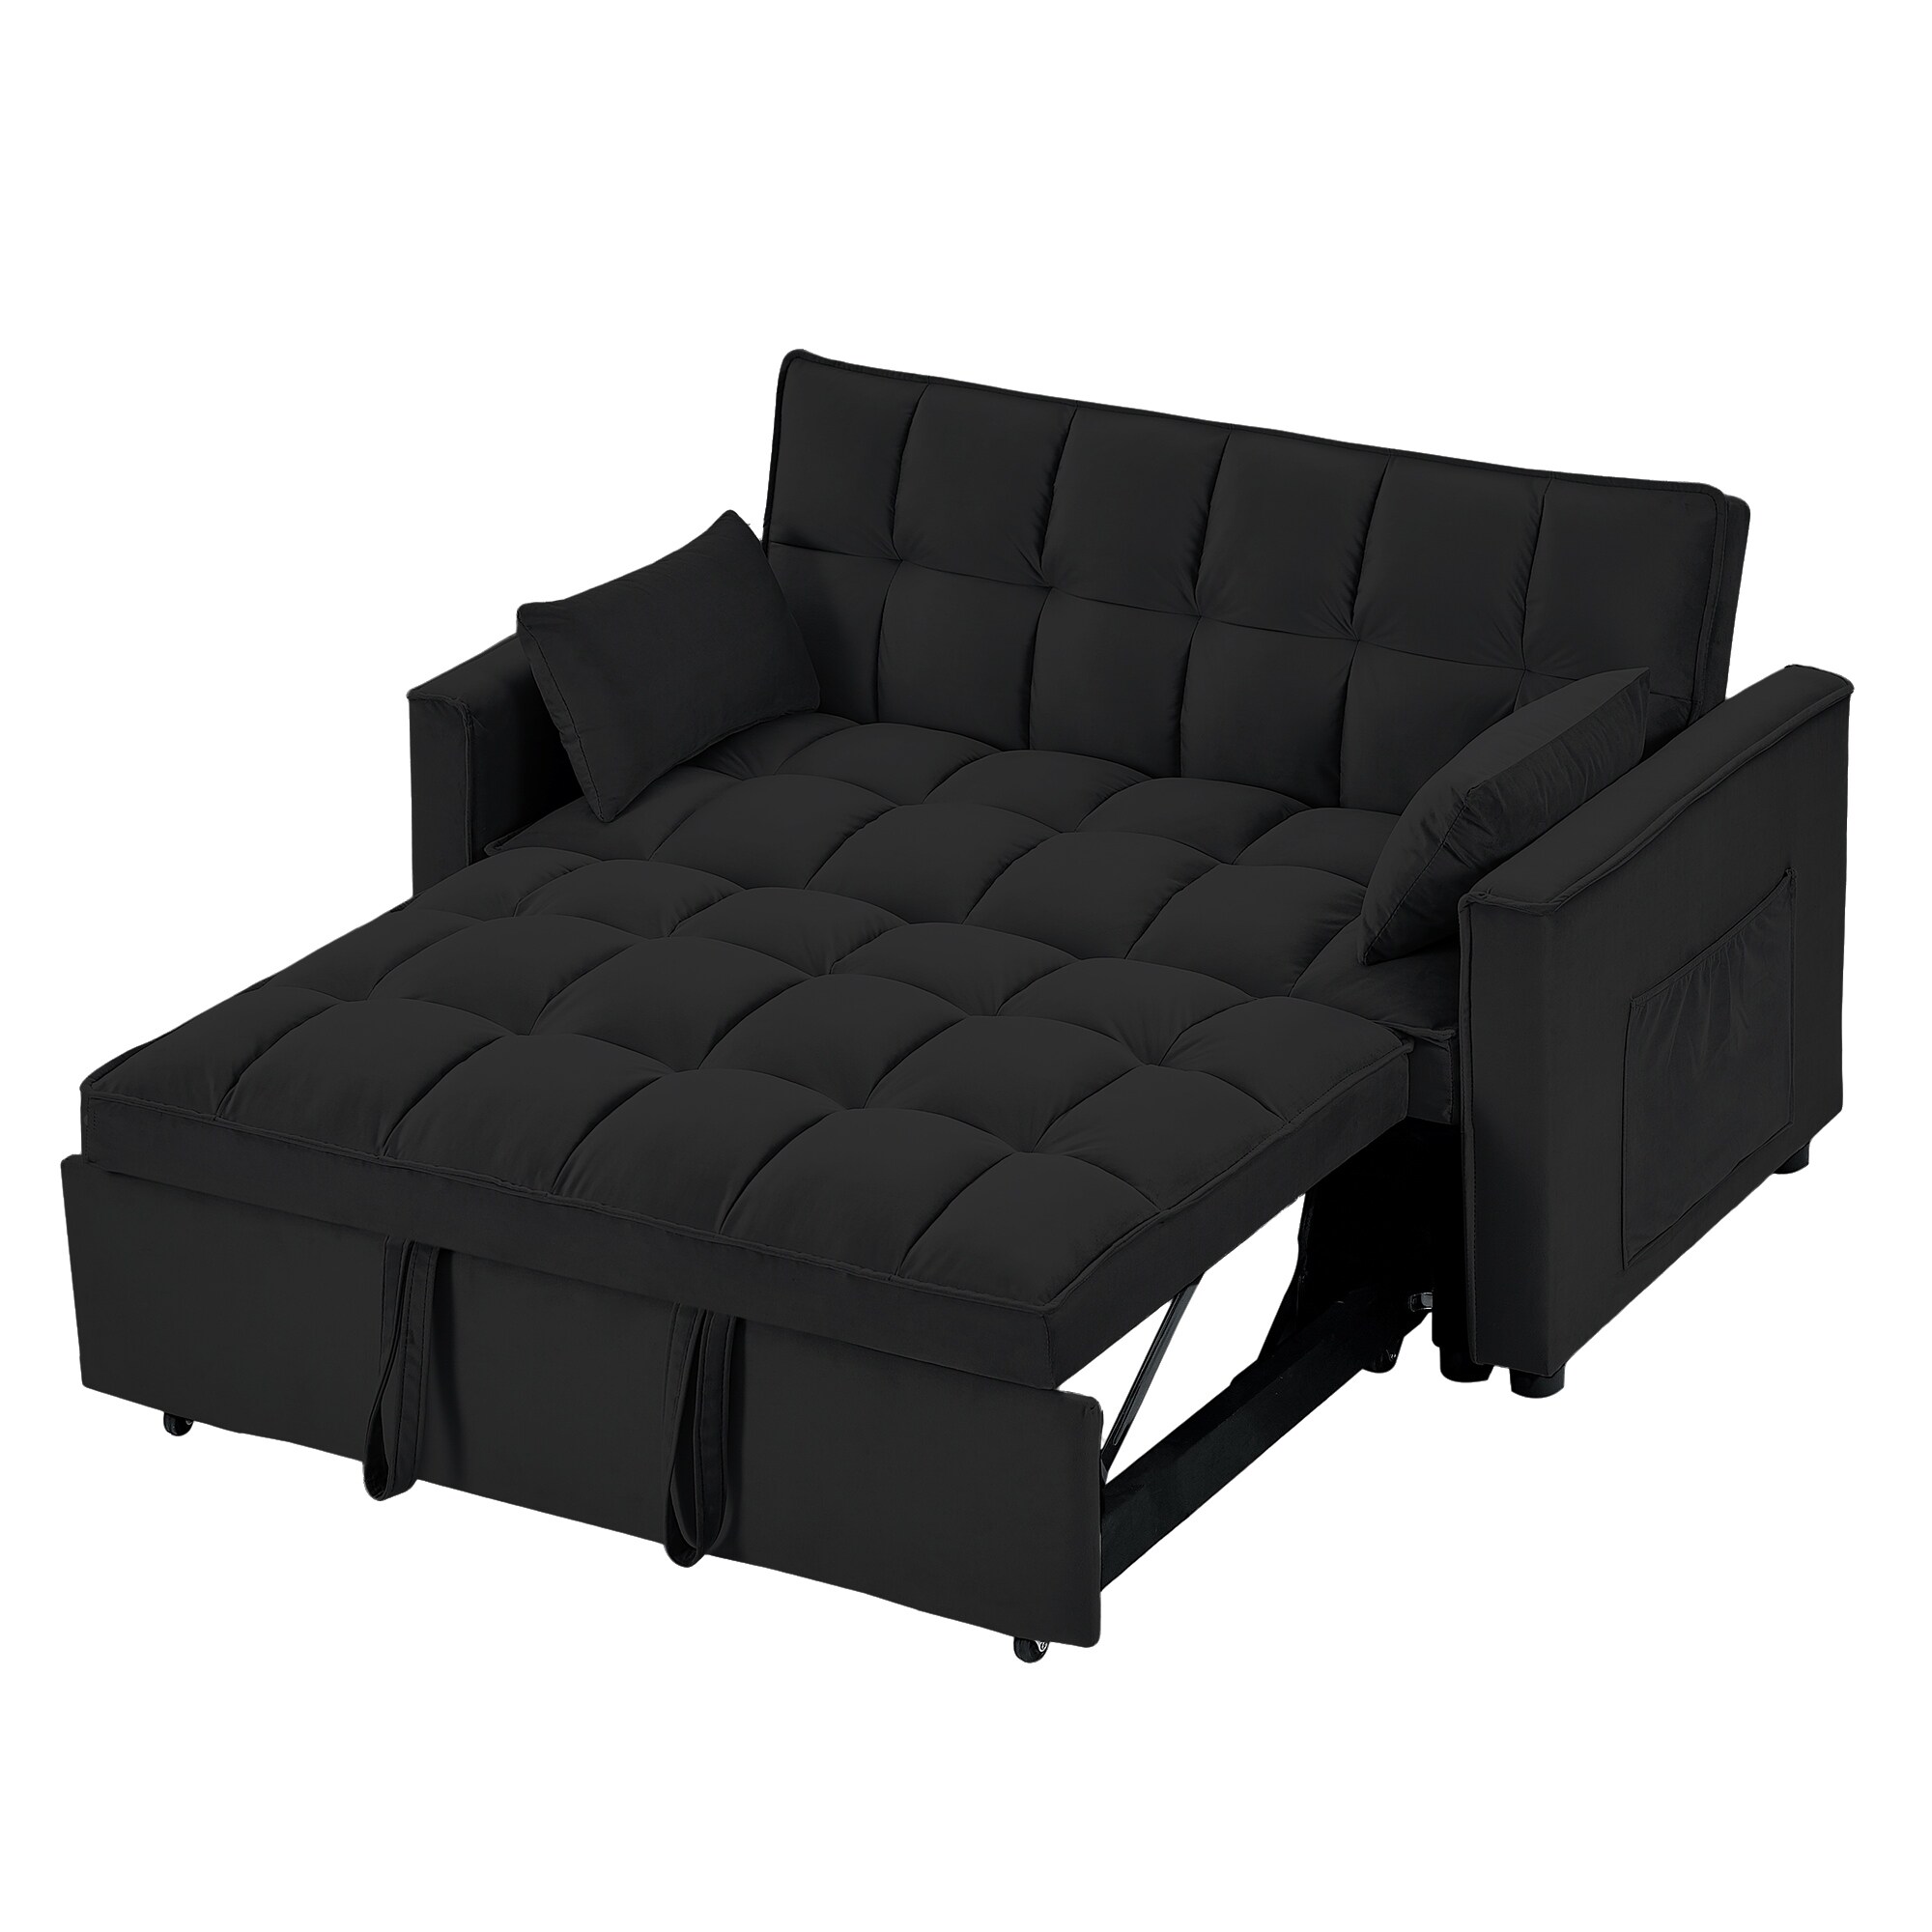 Adjustable Backrest Velvet Sleeper Sofa Bed - Pull-Out Function and Convenient Side Pockets